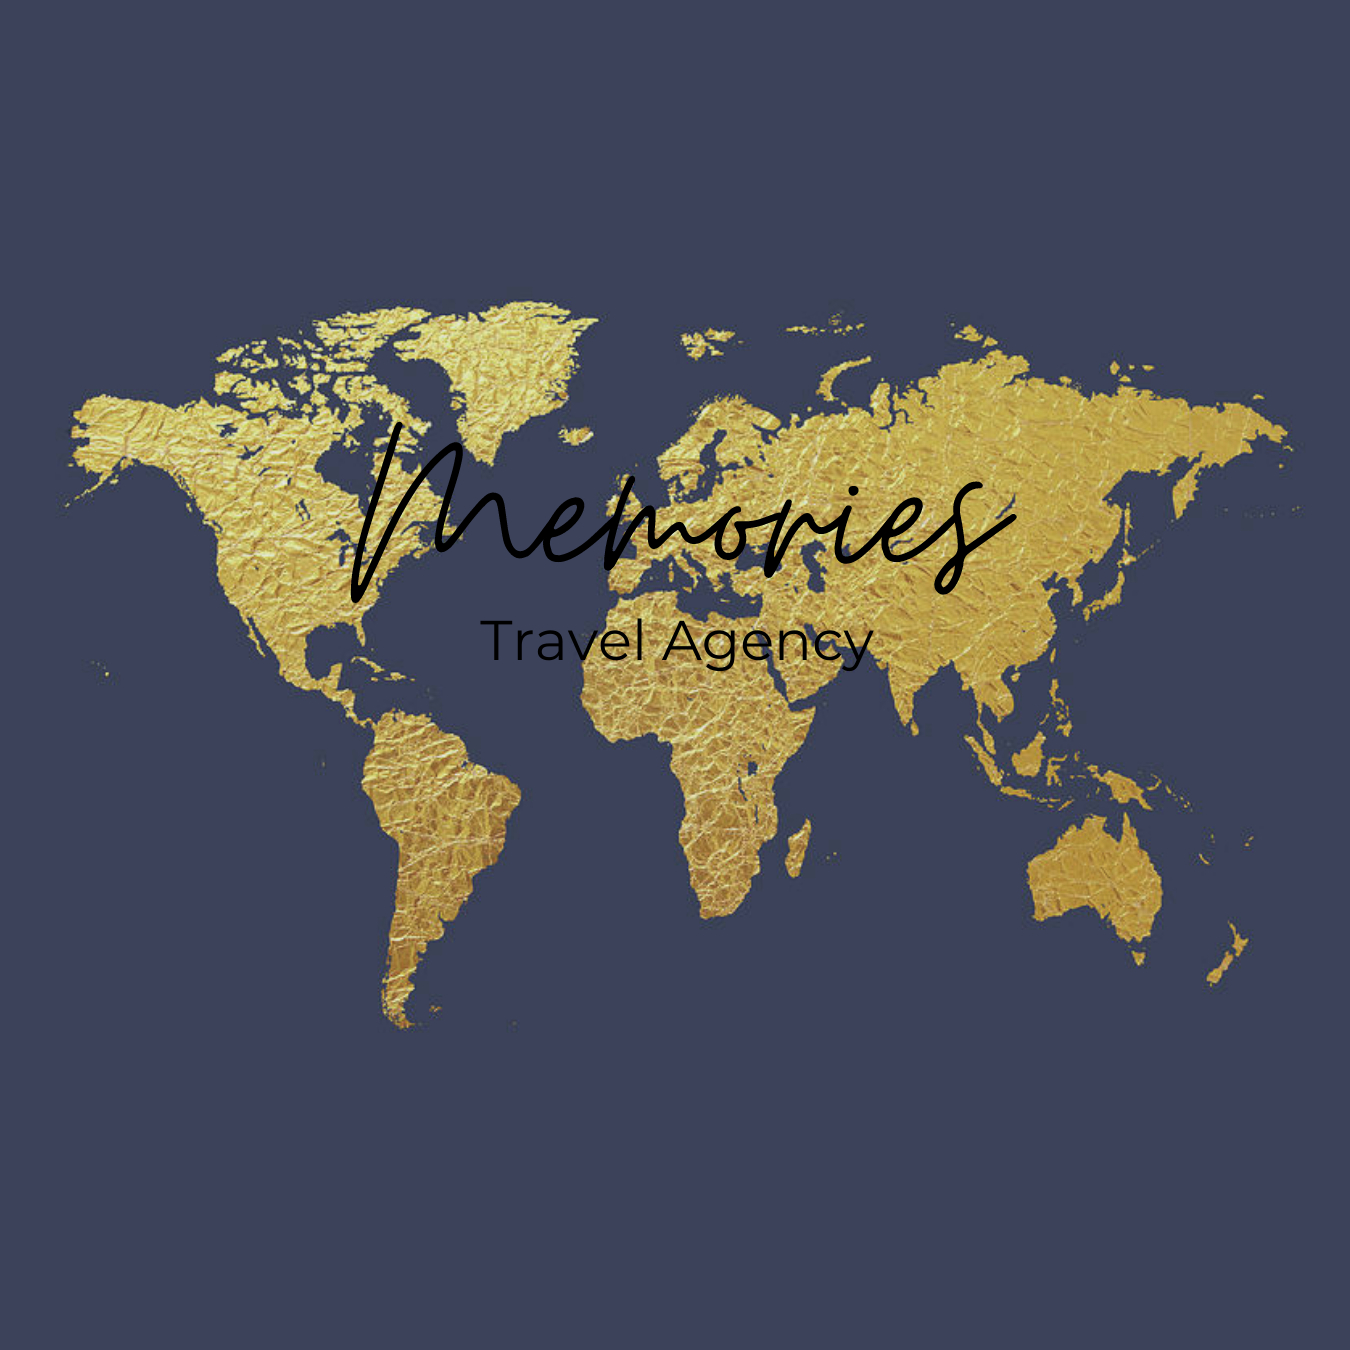 Memories Travel Agency